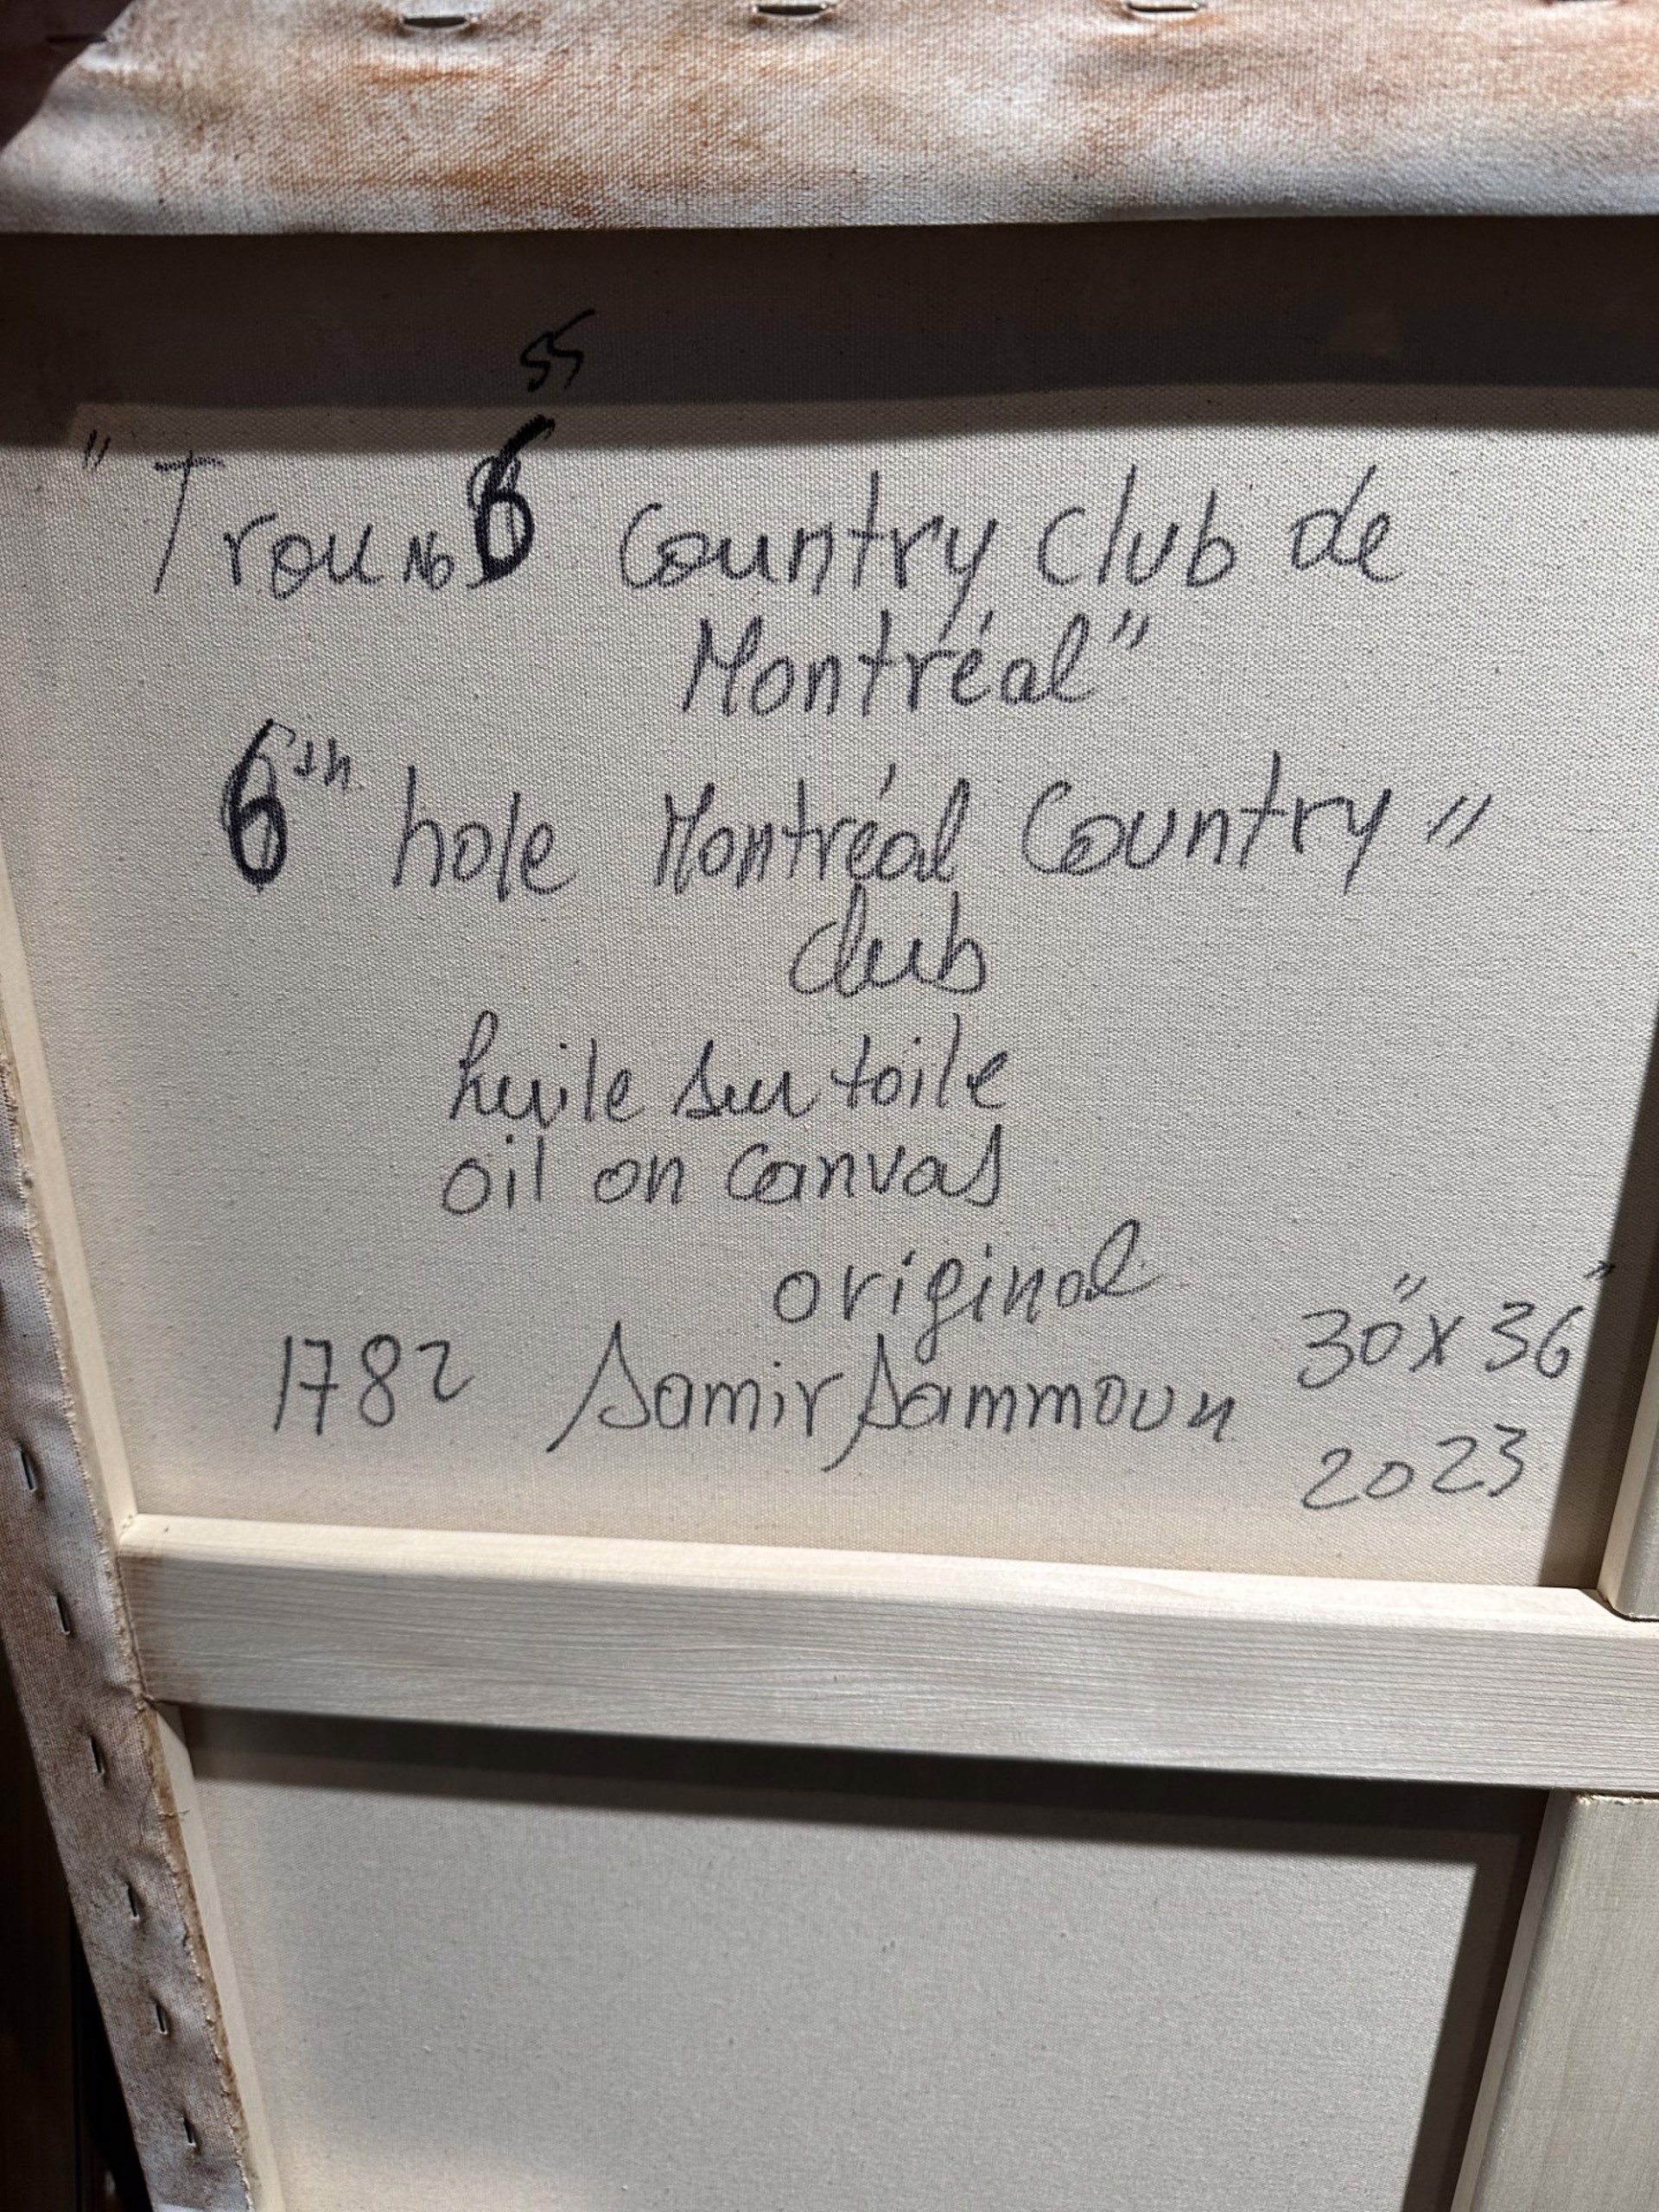 Trou no, 6, Country Club de Montréal, 6th hole, Montreal Country Club by Samir Sammoun